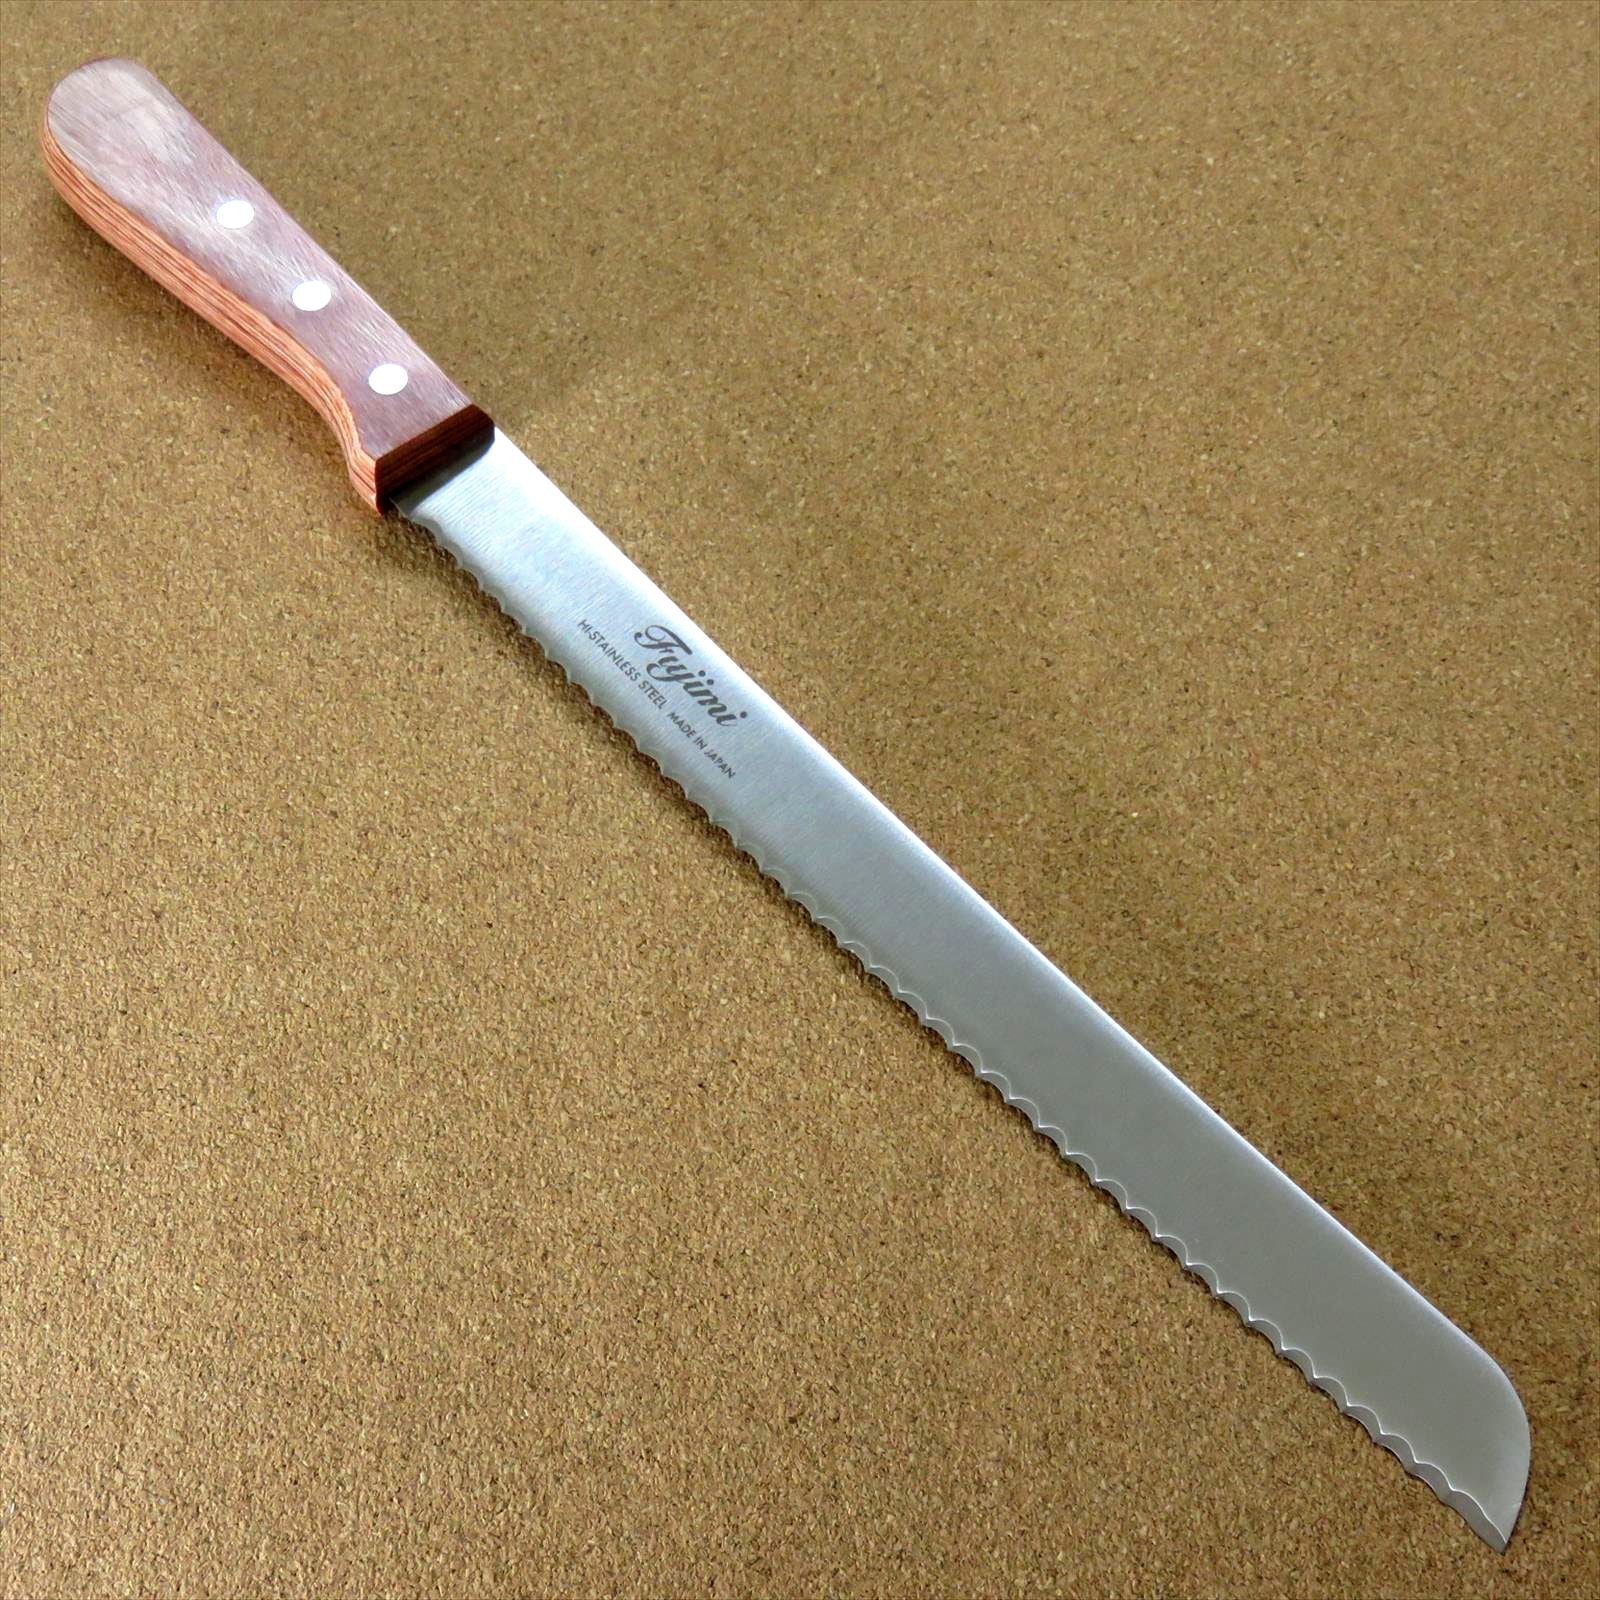 Professional Kitchen Scissors  420J2 Japanese Stainless Steel